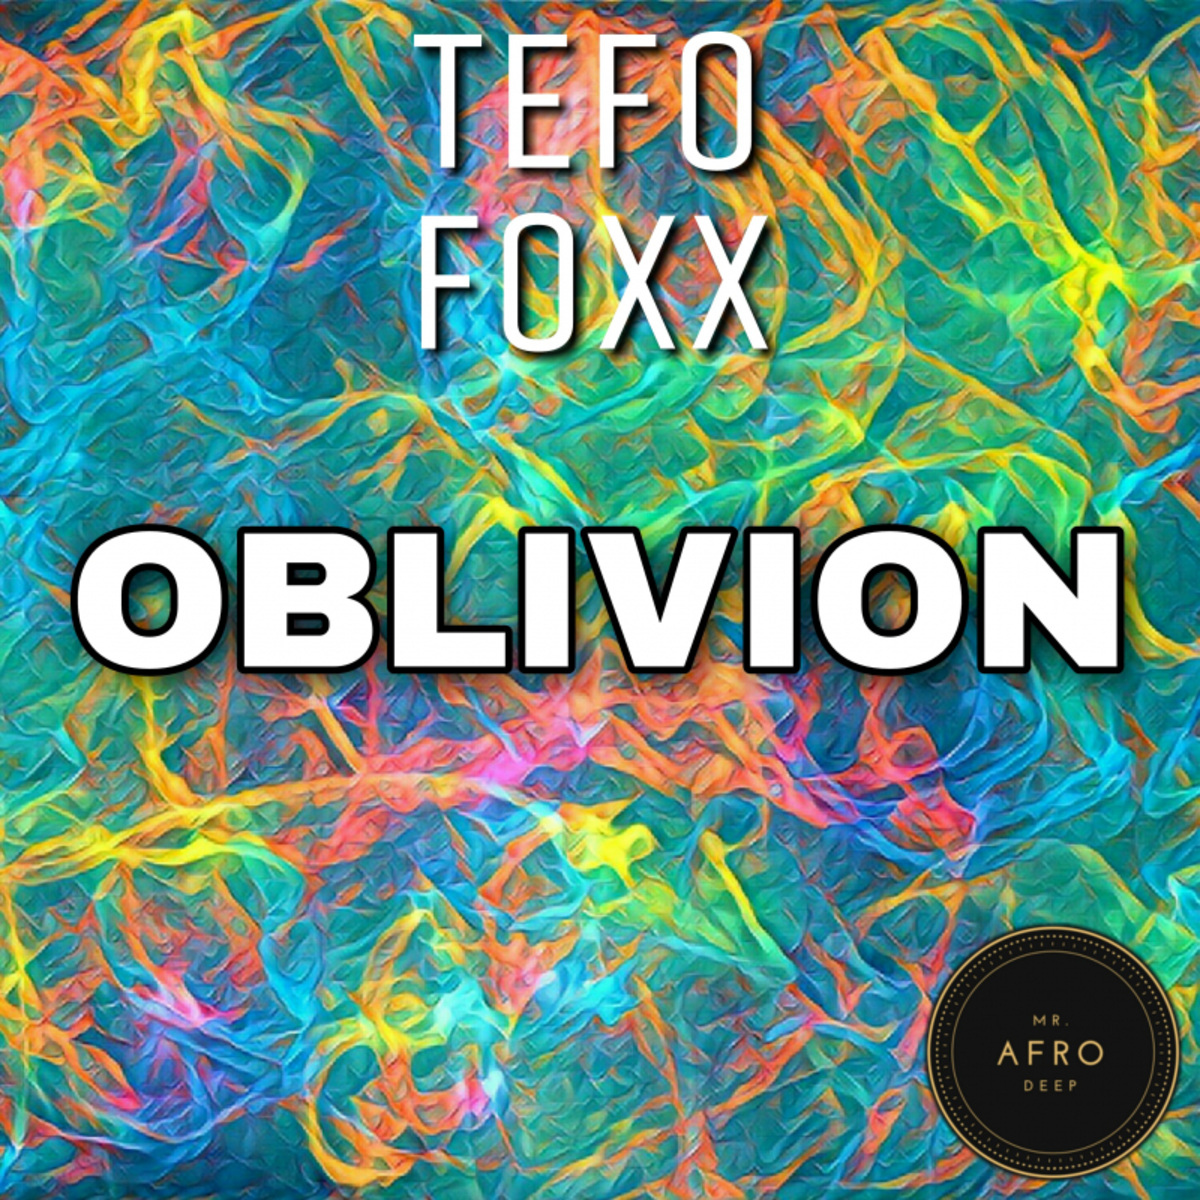 Tefo Foxx - Oblivion / Mr. Afro Deep